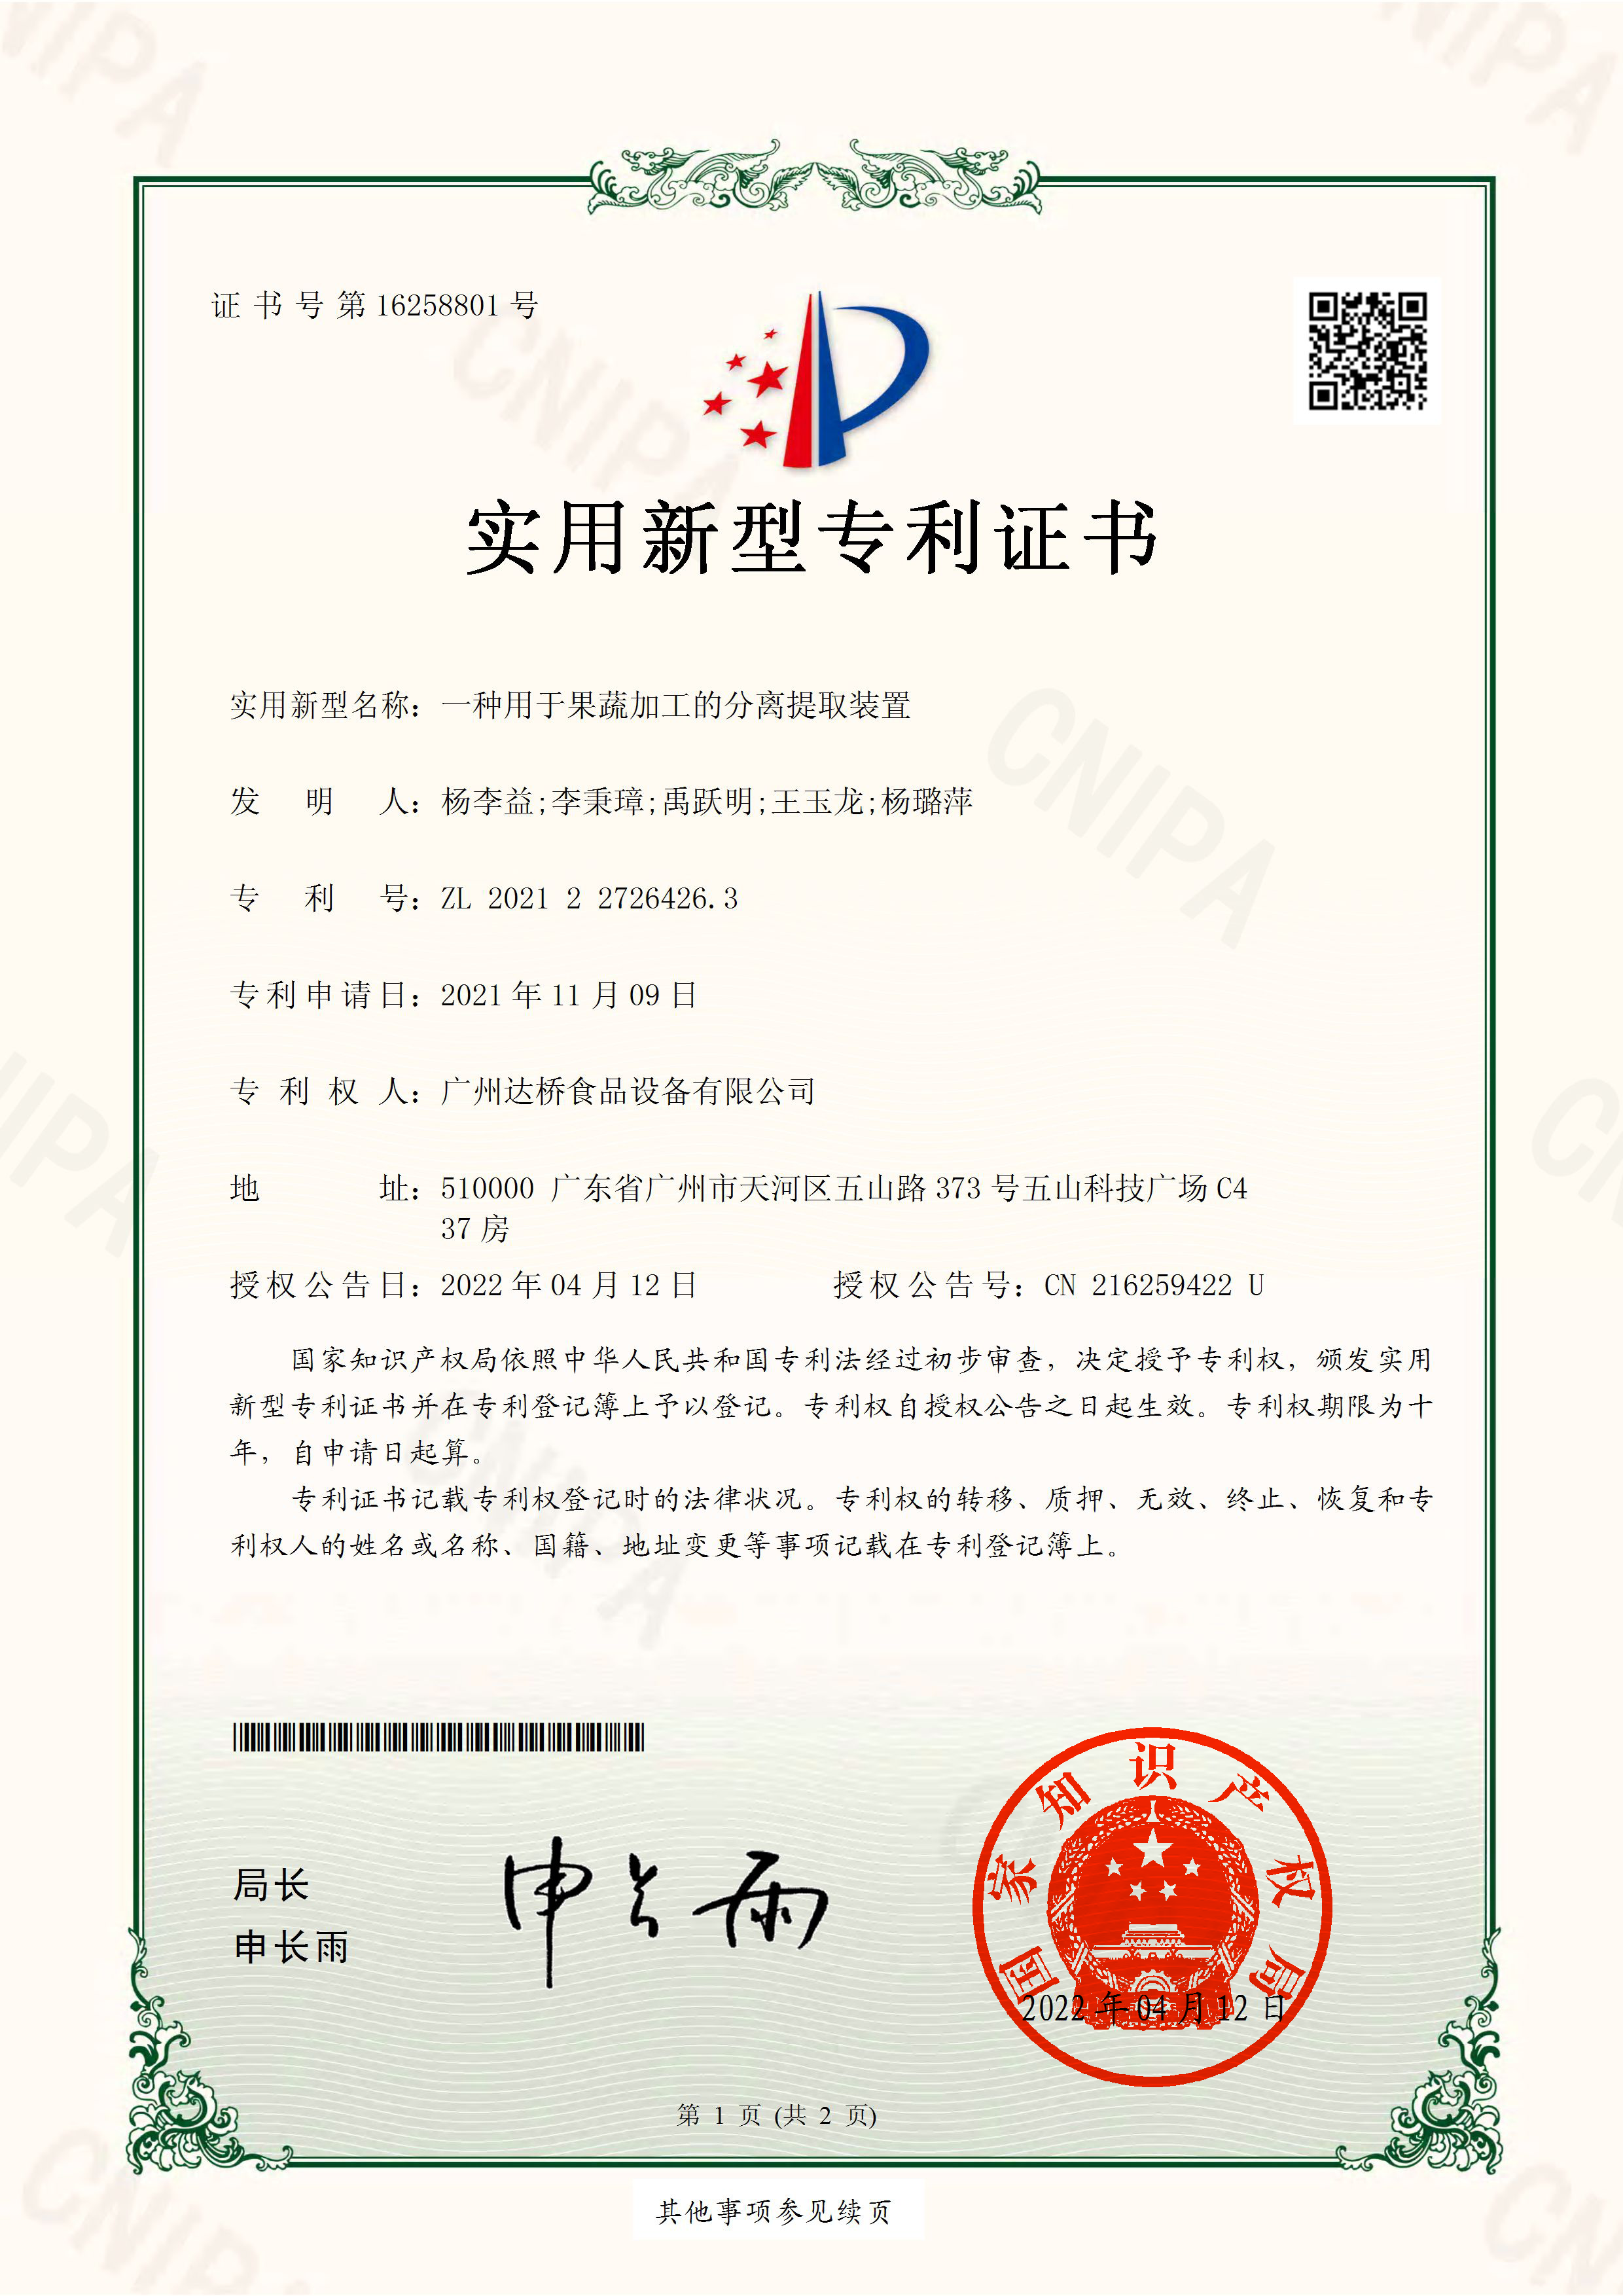 https://gzdaqiao.com/upload/杨李益专利之61——一种用于果蔬加工分离提取装置